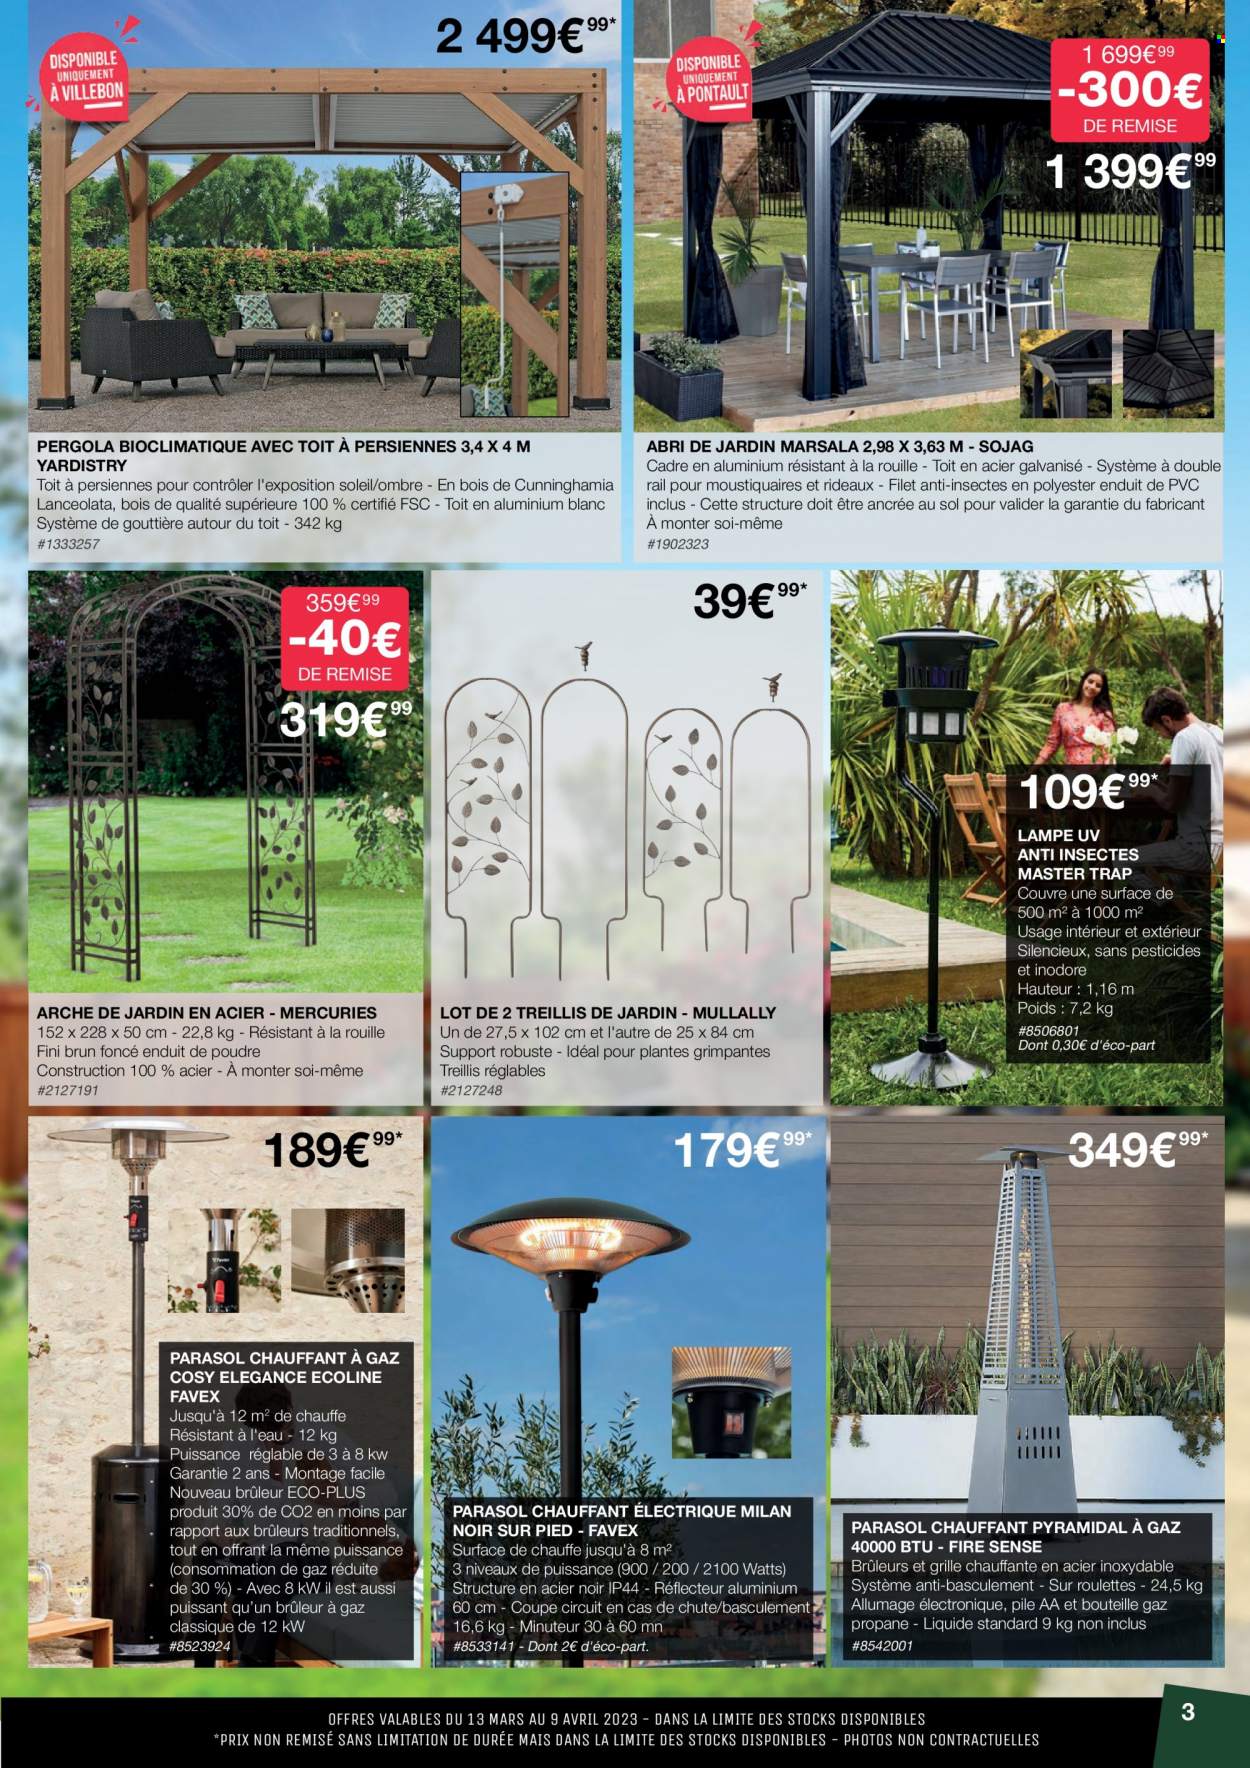 thumbnail - Catalogue Costco - 13/03/2023 - 09/04/2023 - Produits soldés - Marsala, rideau, lampe, pergola, abri de jardin. Page 3.